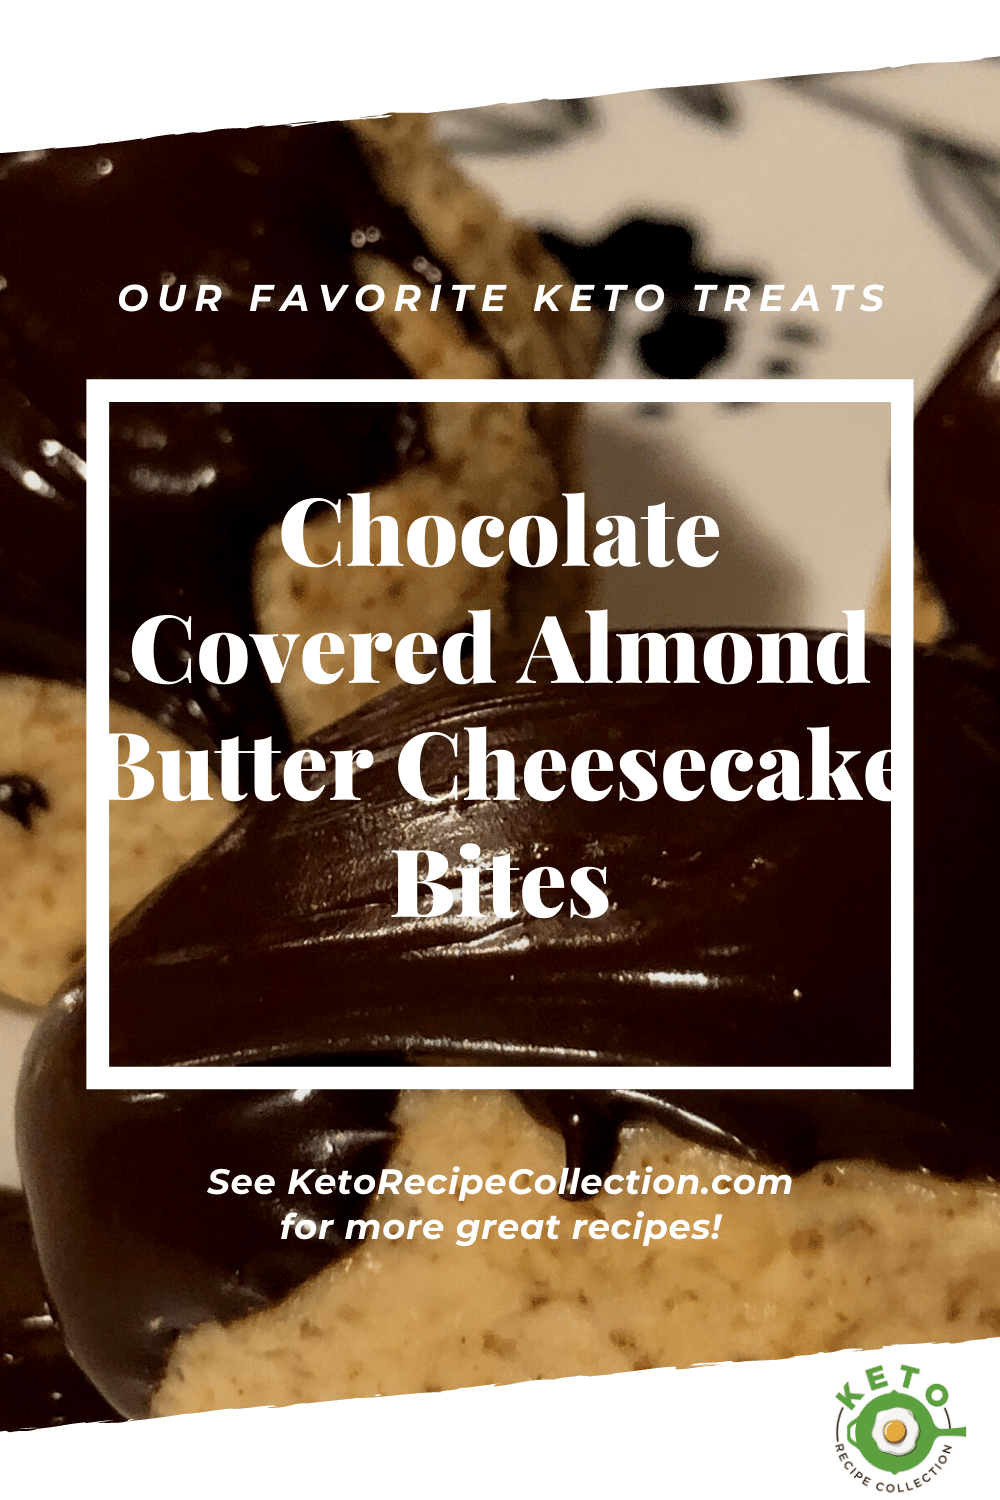 Almond Butter Cheesecake Bites